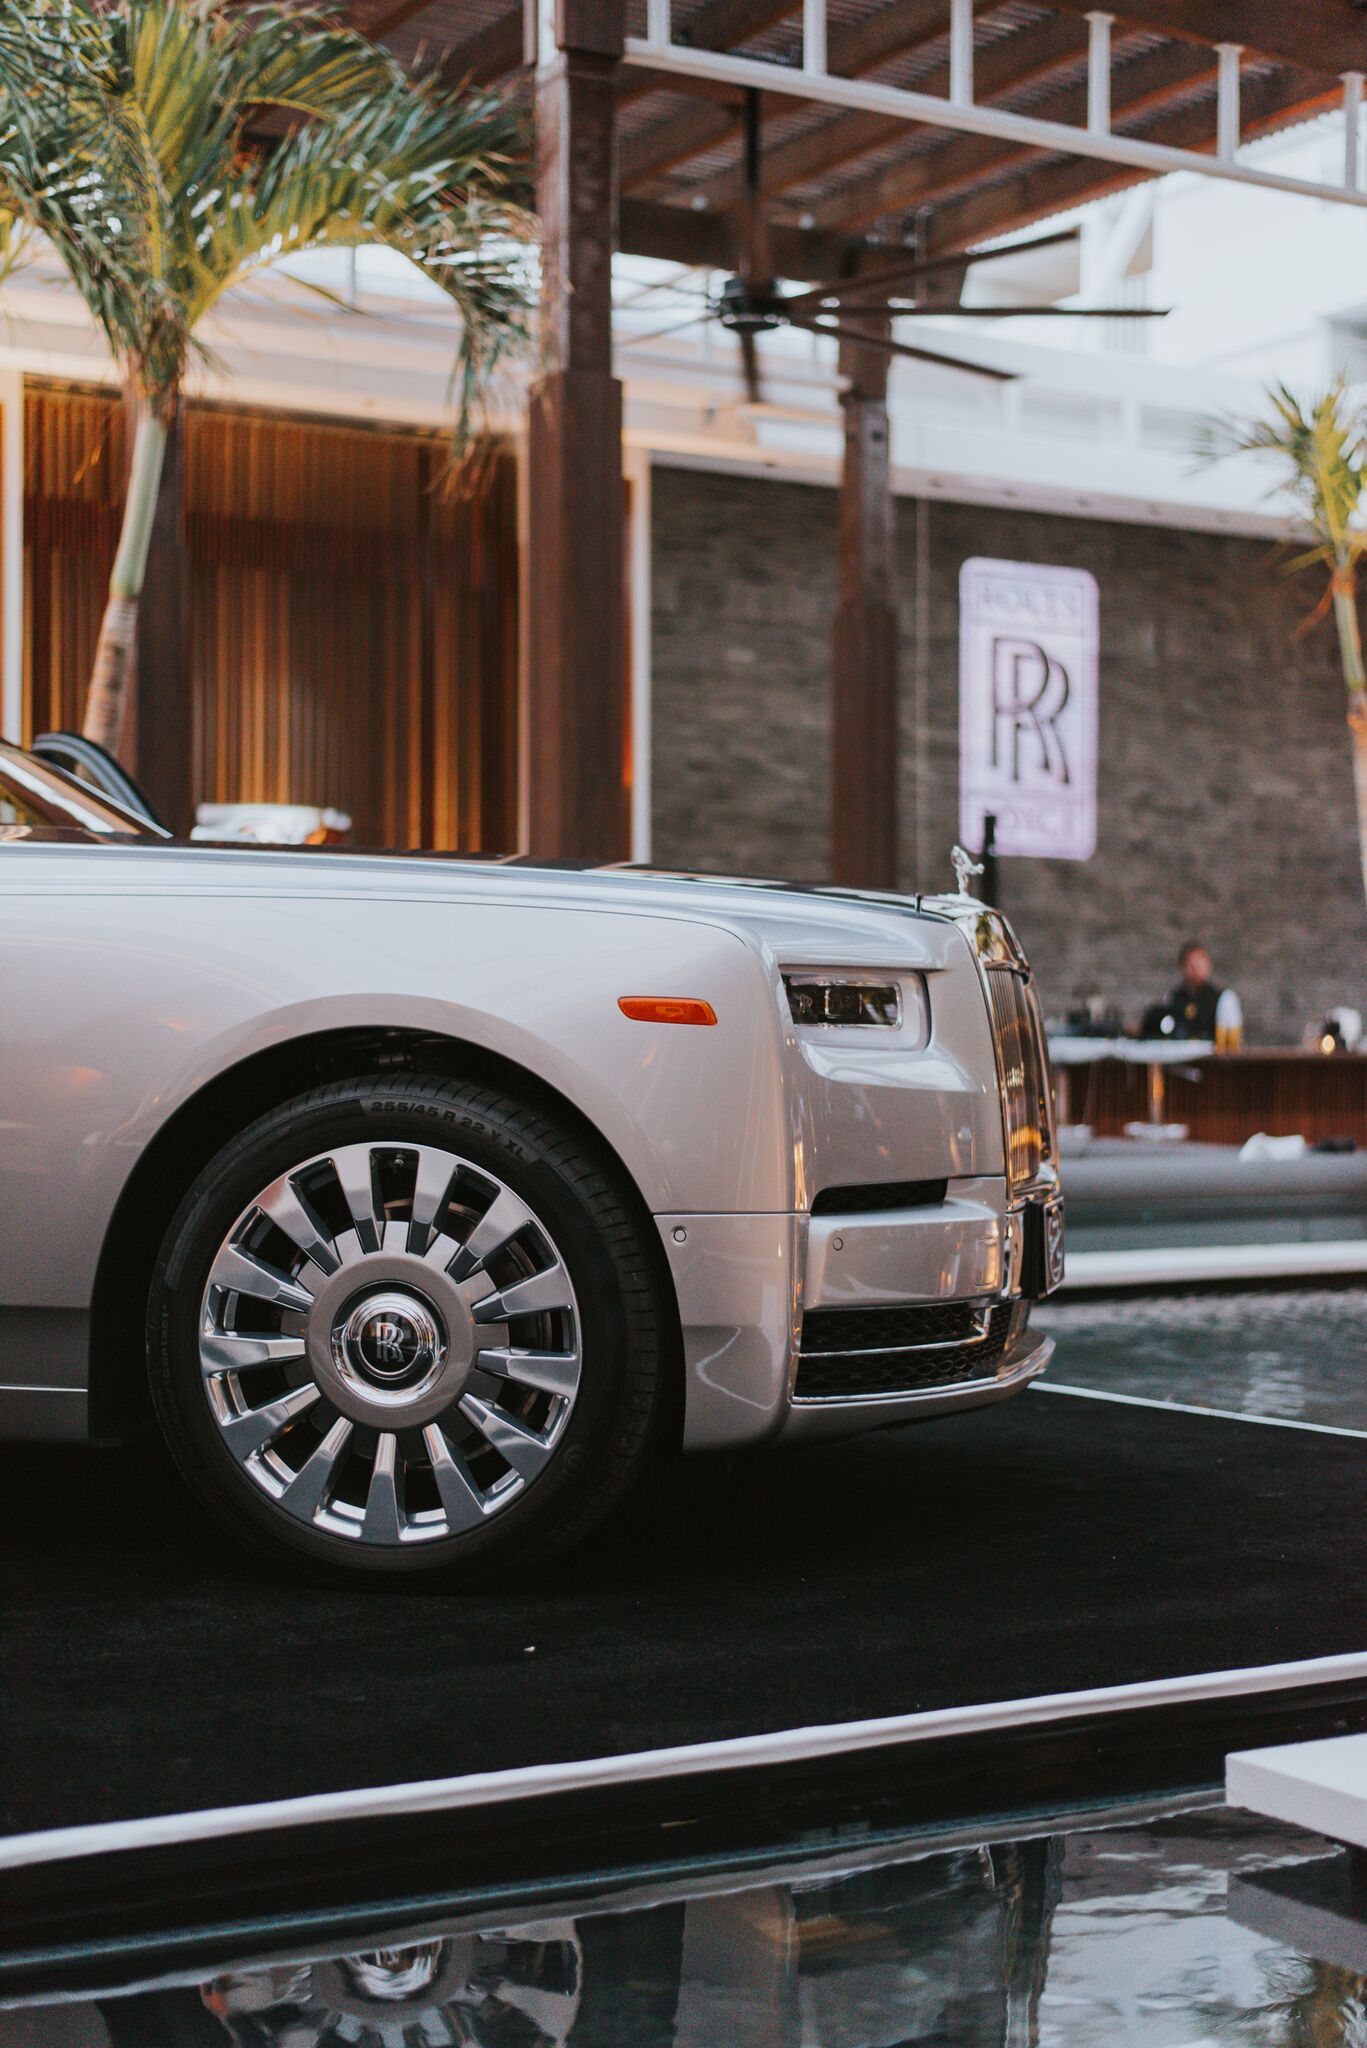 By Design: Rolls-Royce Phantom VIII